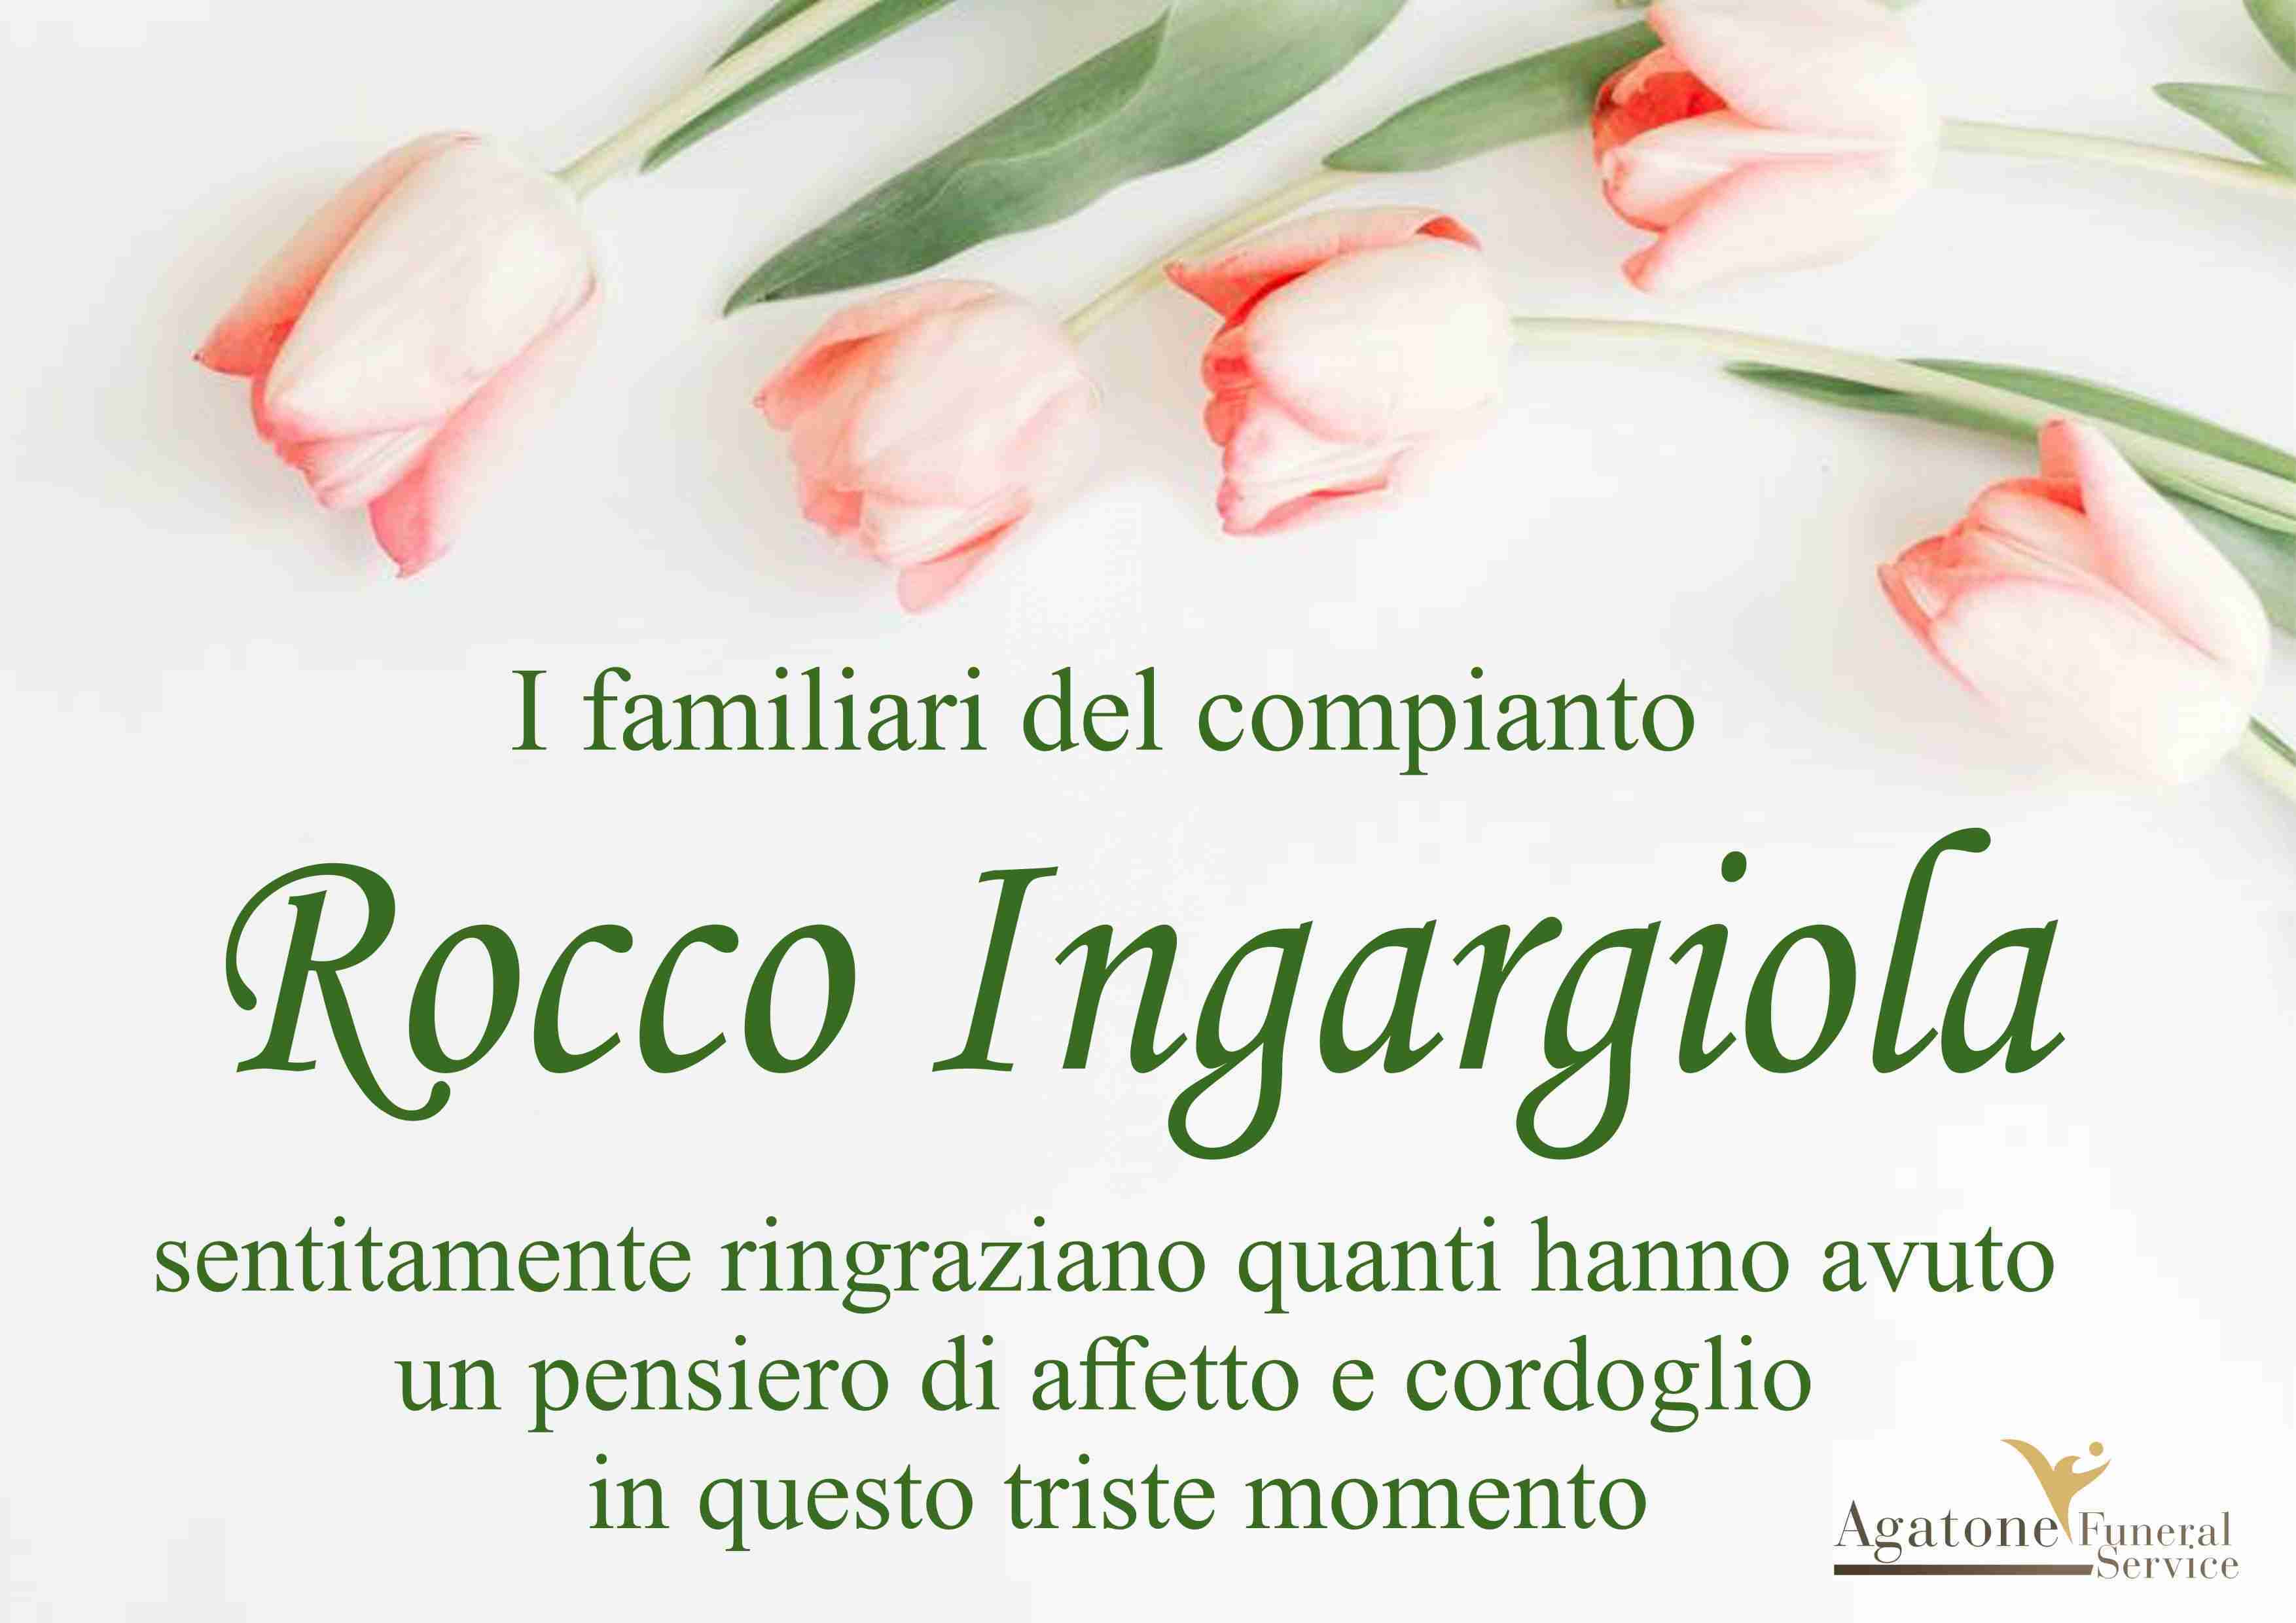 Rocco Ingargiola